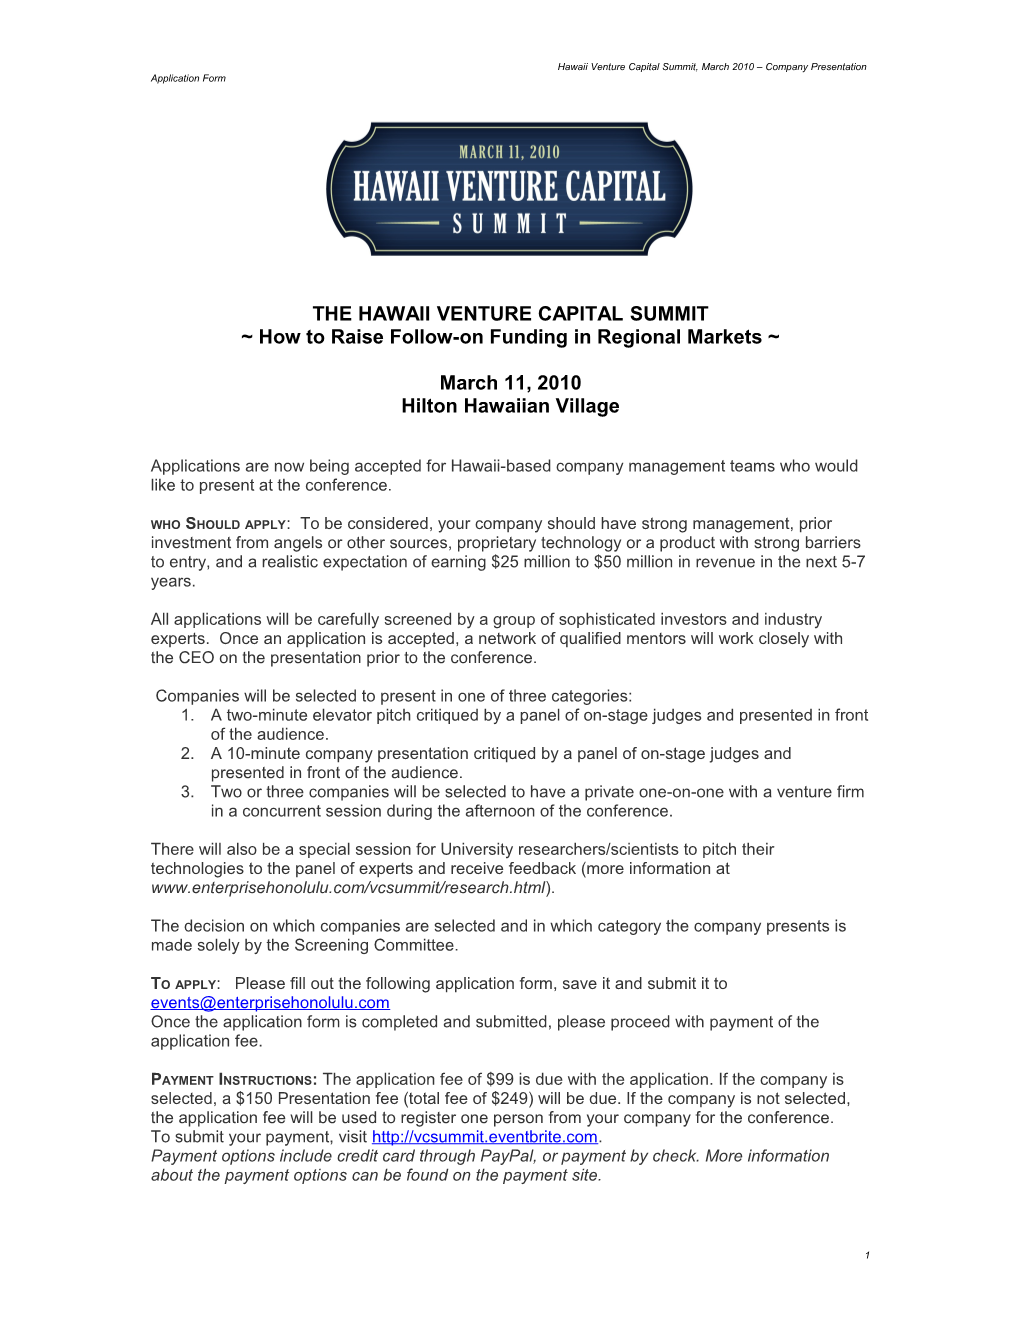 The Hawaii Venture Capital Summit